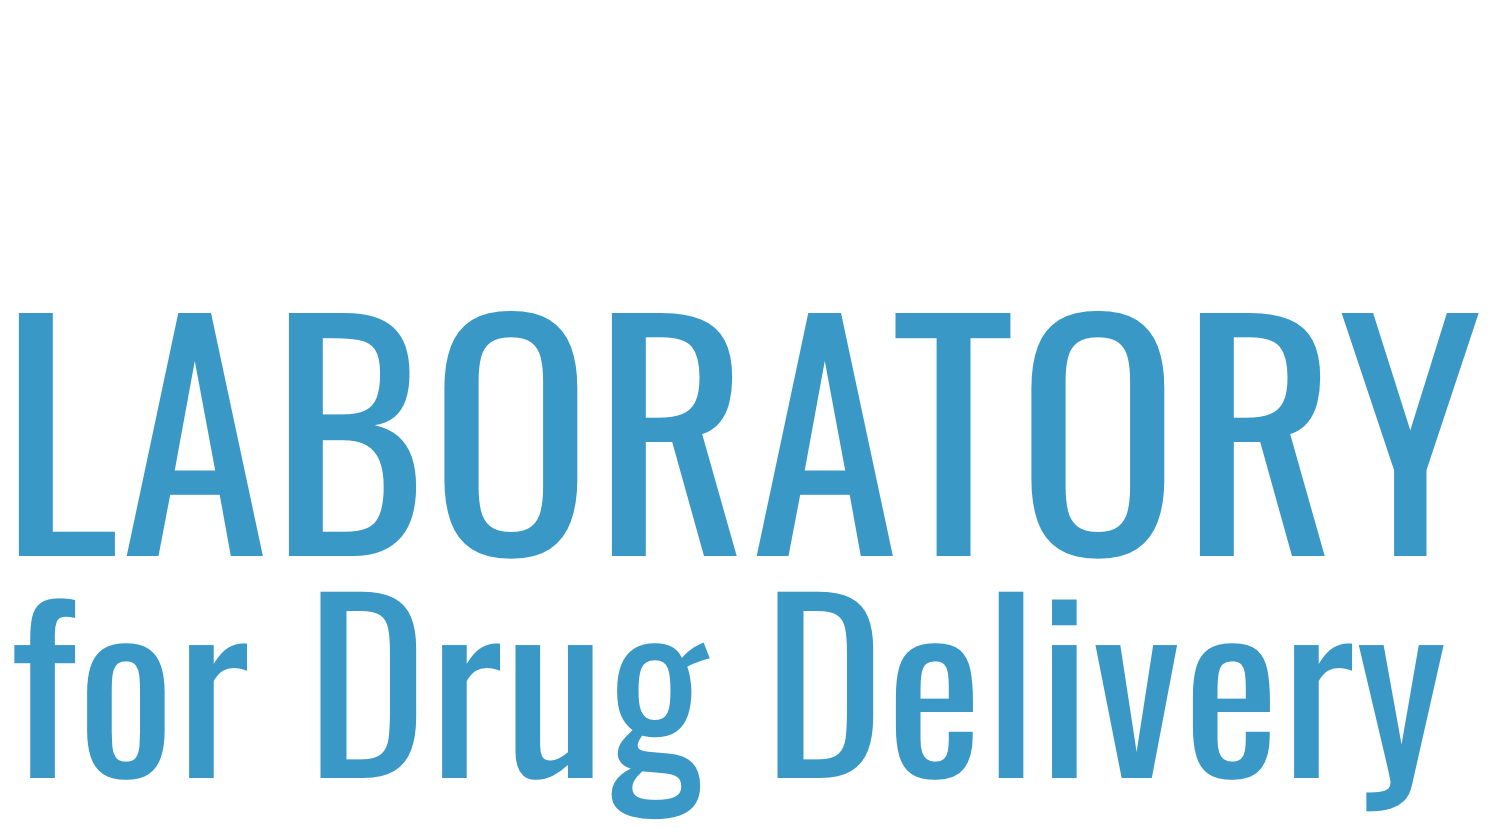 The Mitragotri Laboratory for Drug Delivery